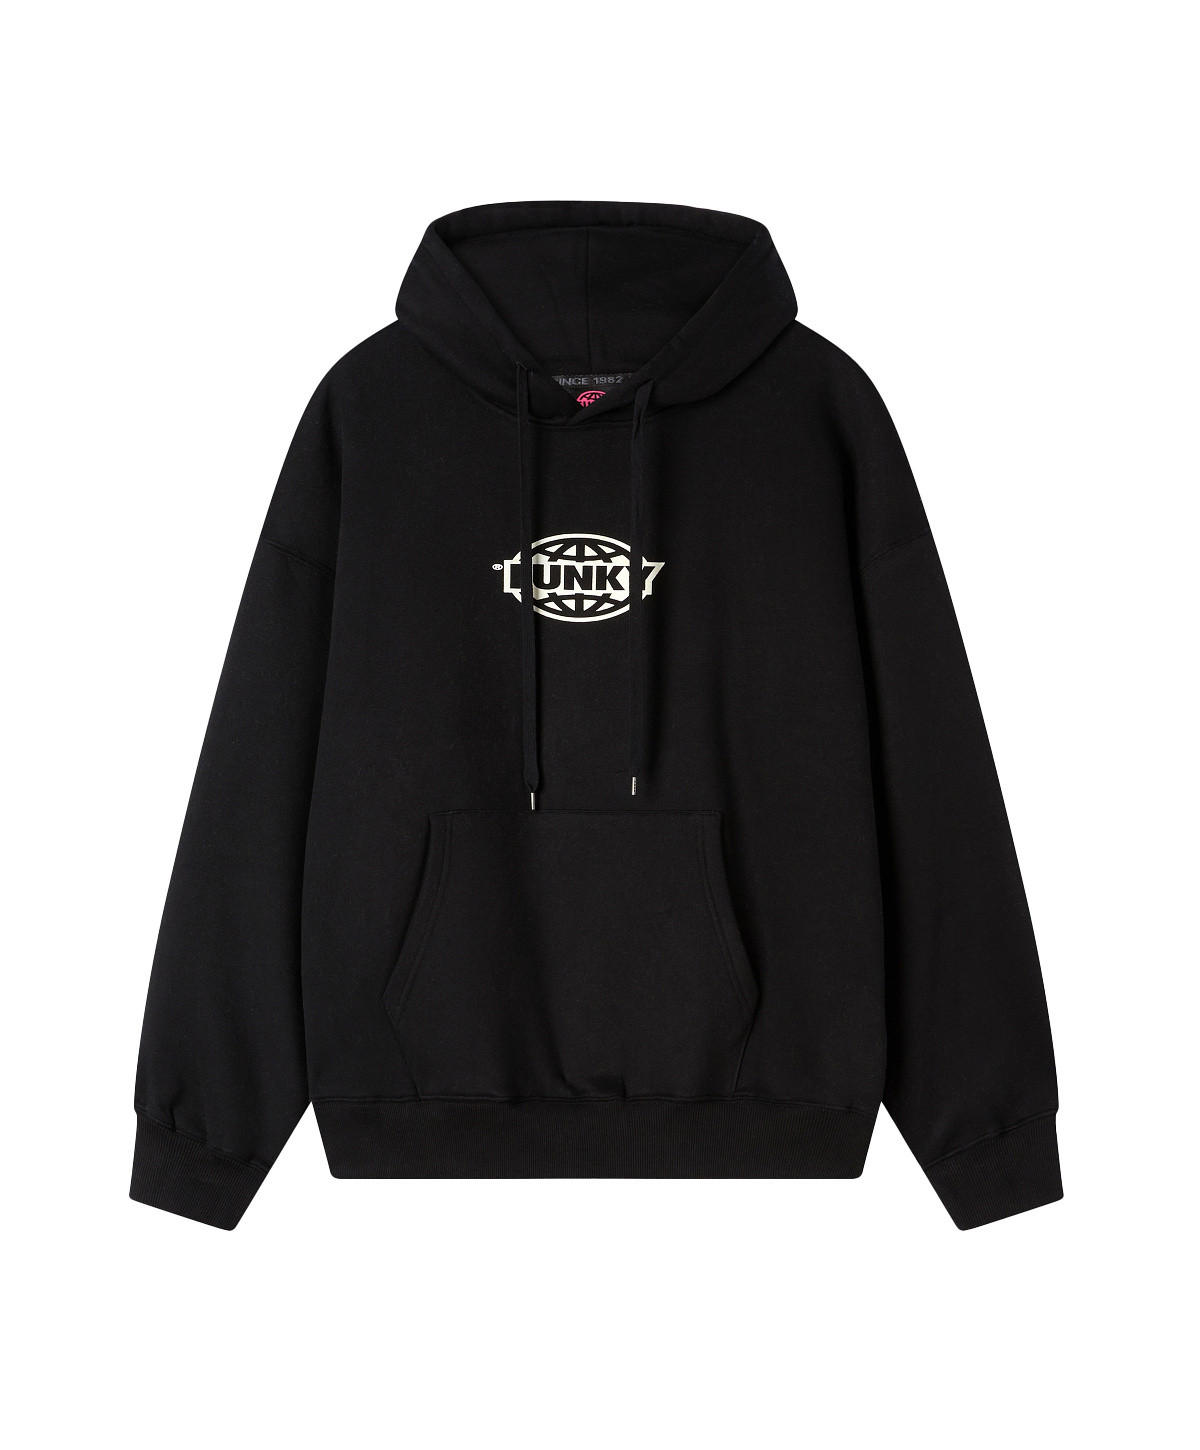 Funky - Oval logo hoodie, Black, large image number 0